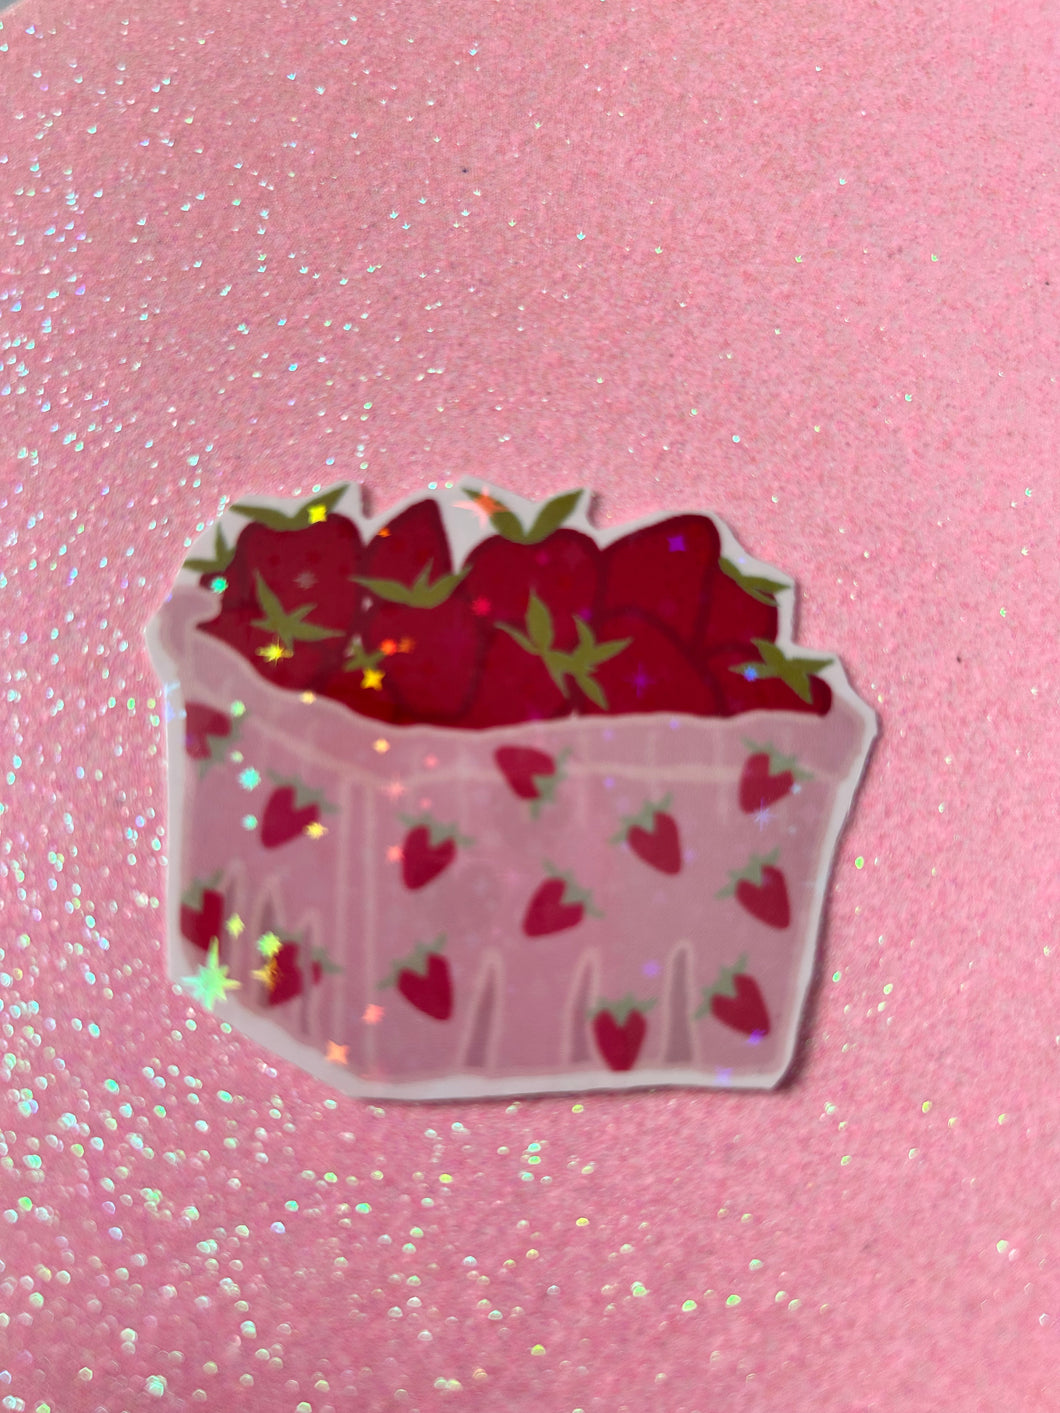 Farmer’s Market Strawberries Vinyl Sticker